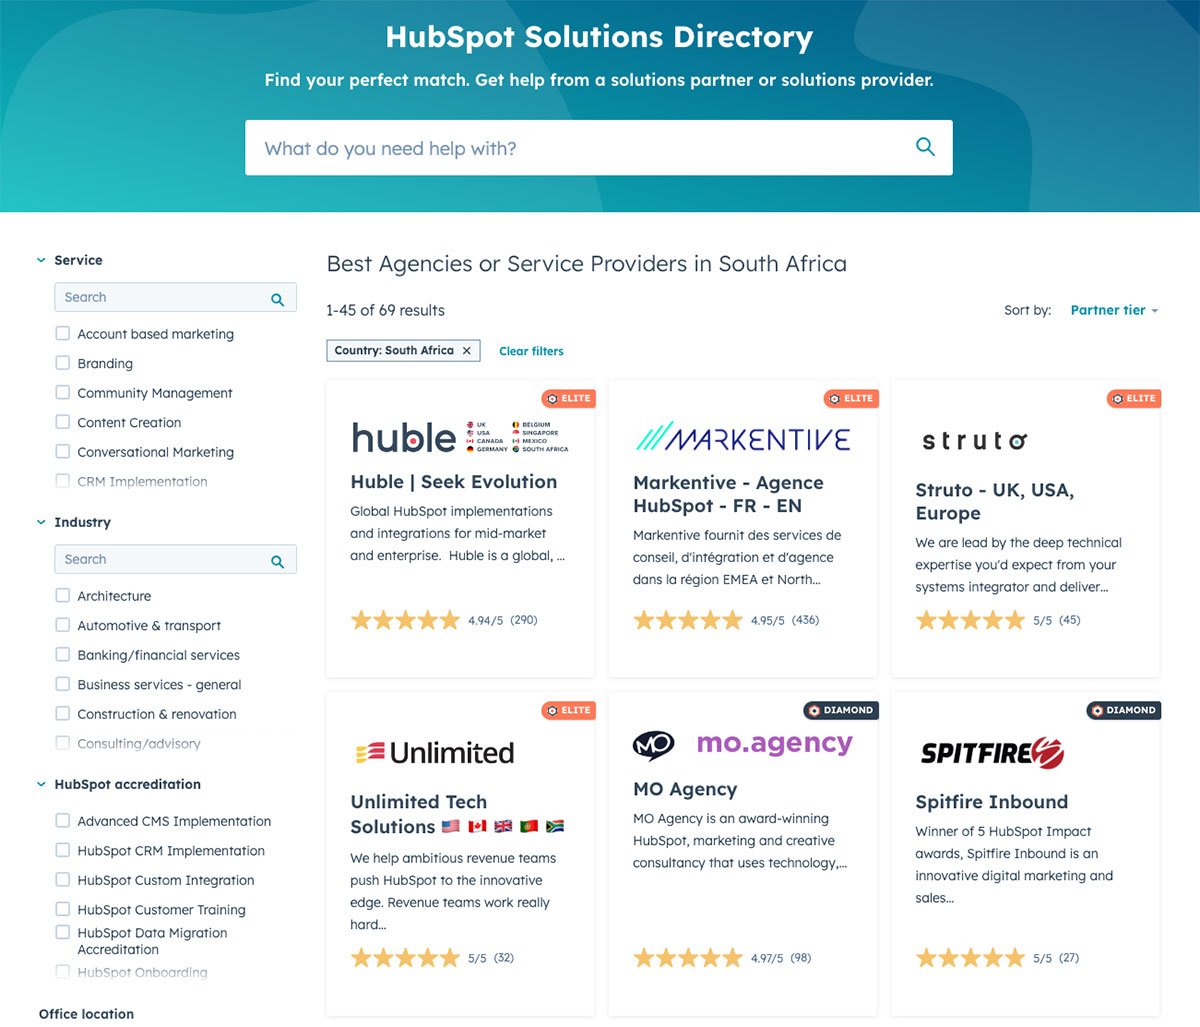 hubspot_solutions_directory